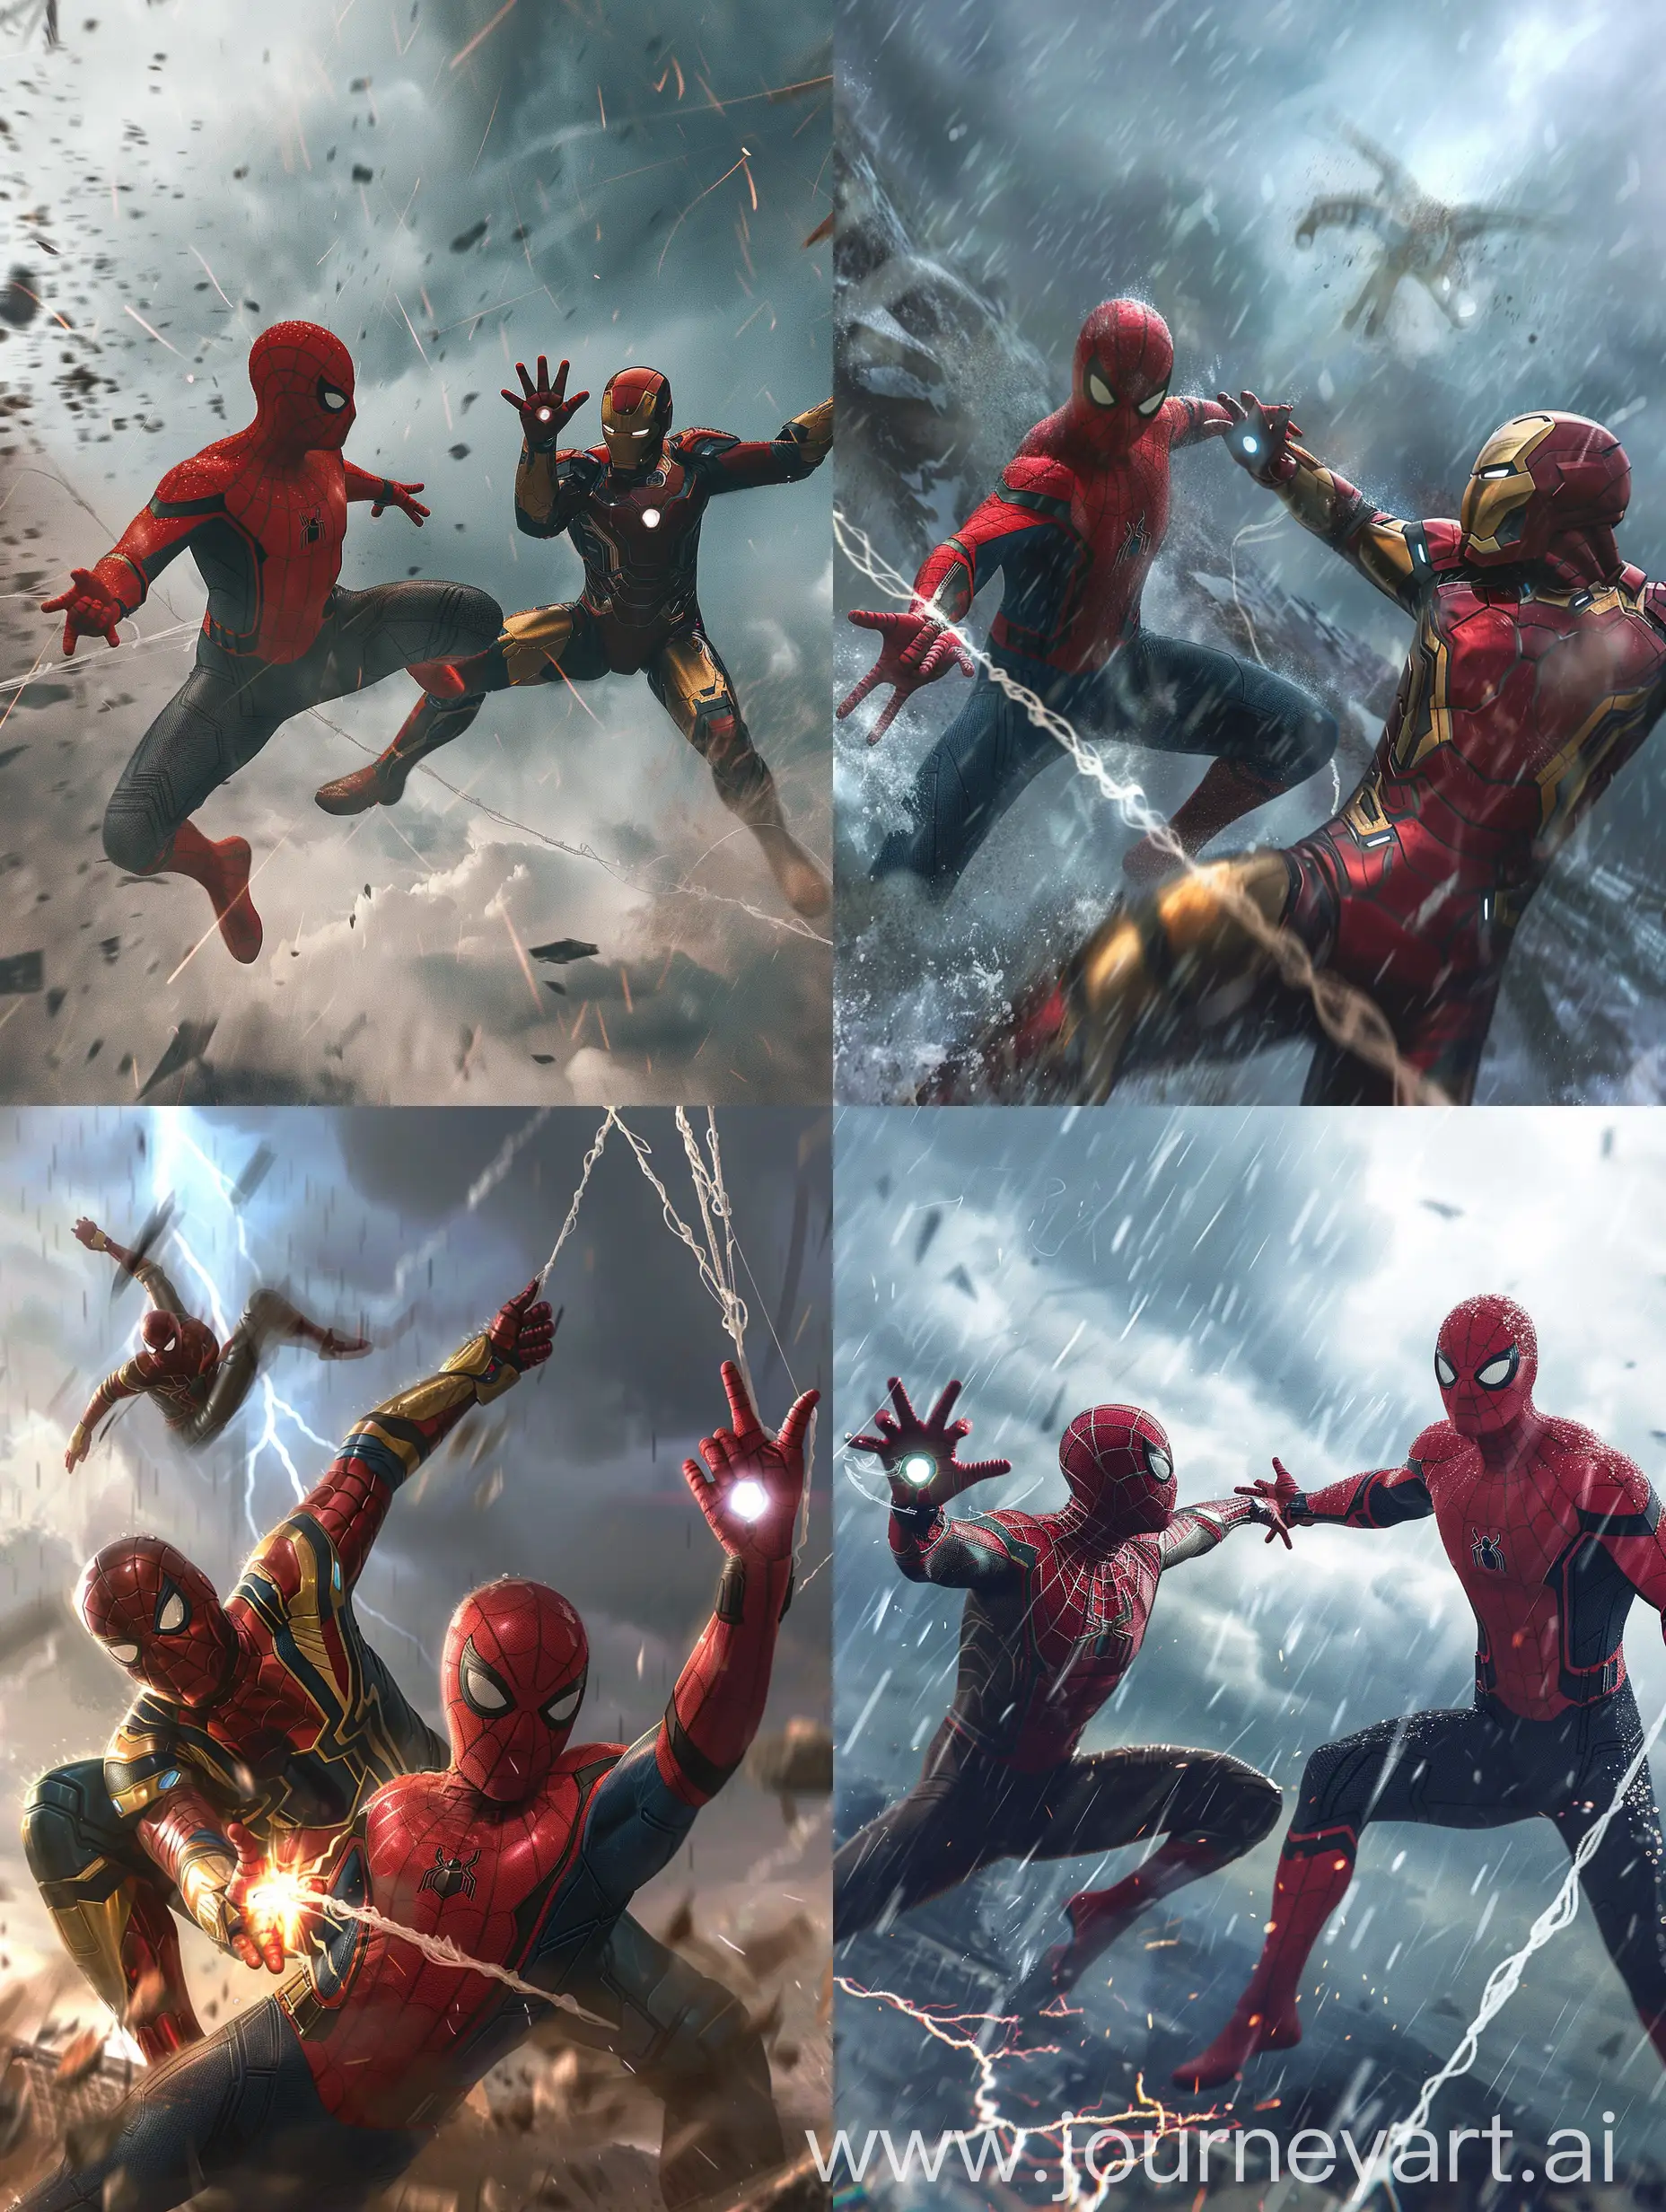 Epic-Sky-Battle-Spiderman-vs-Ironman-in-Cinematic-Storm